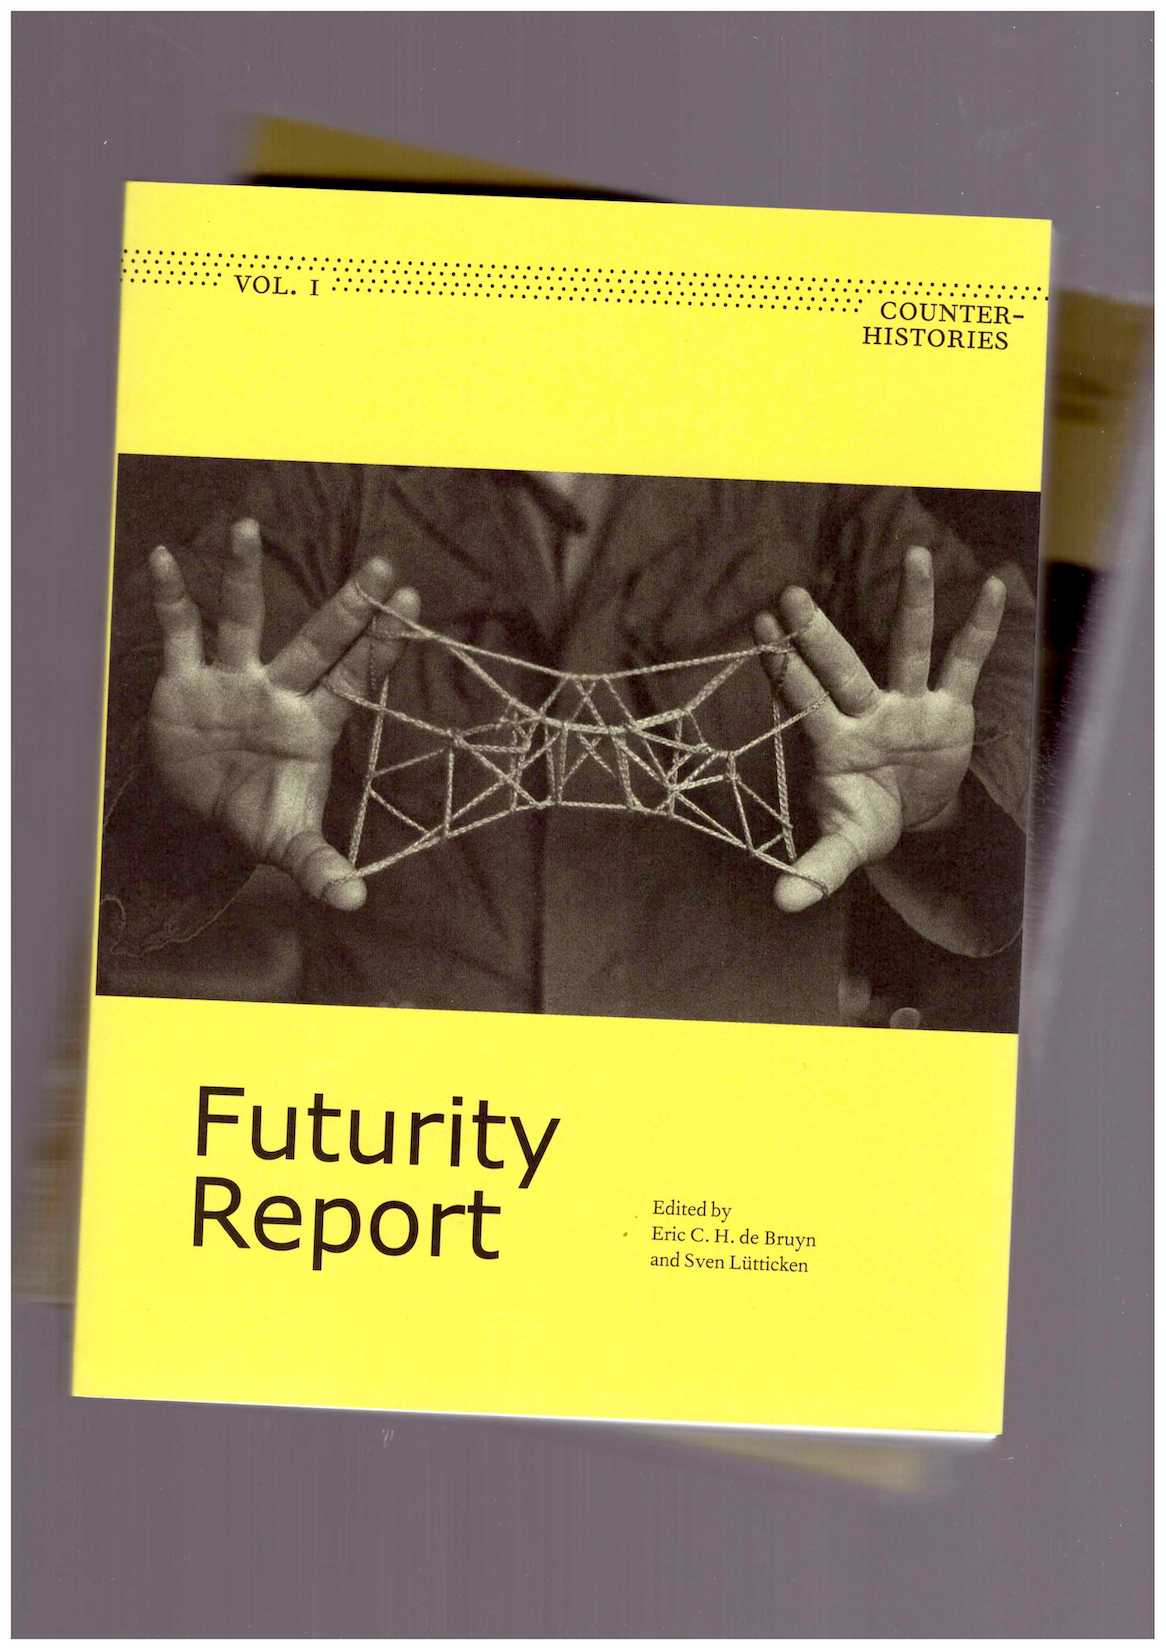 DE BRUYN, Eric; LÜTTICKEN, Sven (eds.) - Futurity Report. Counter-Histories Vol. 1